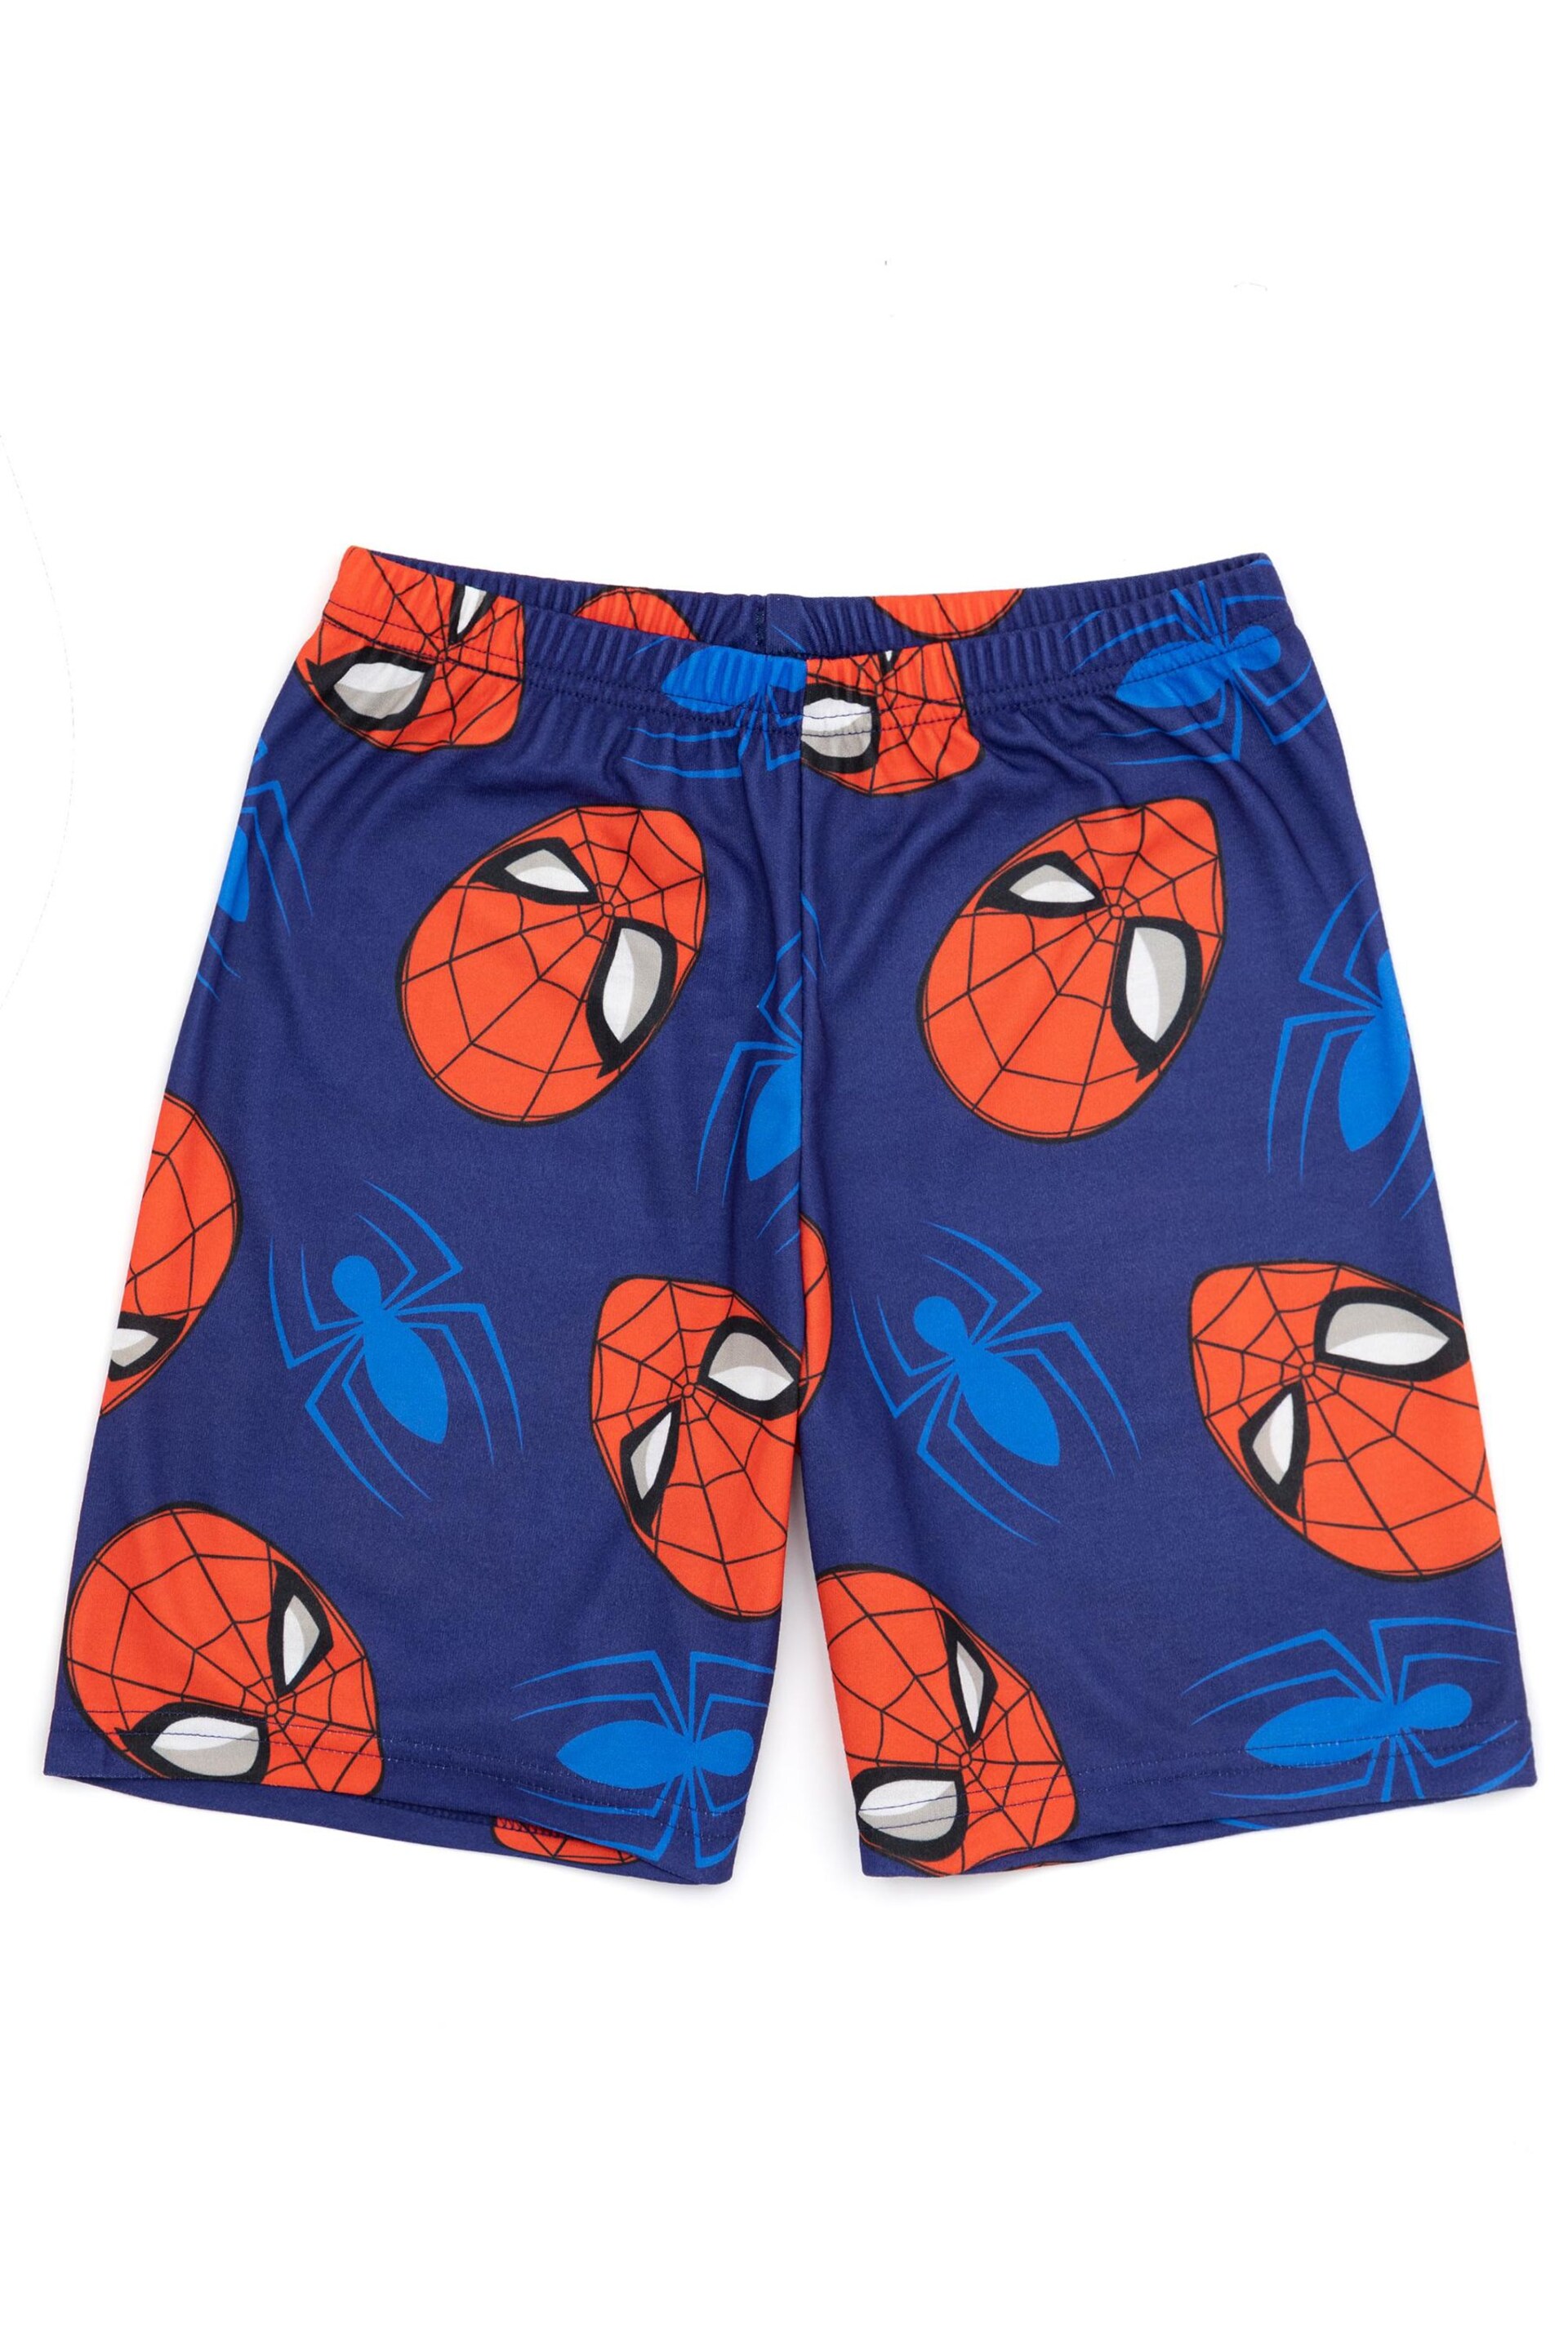 Vanilla Underground Red Boys Spiderman Pyjamas 2 Pack - Image 3 of 5